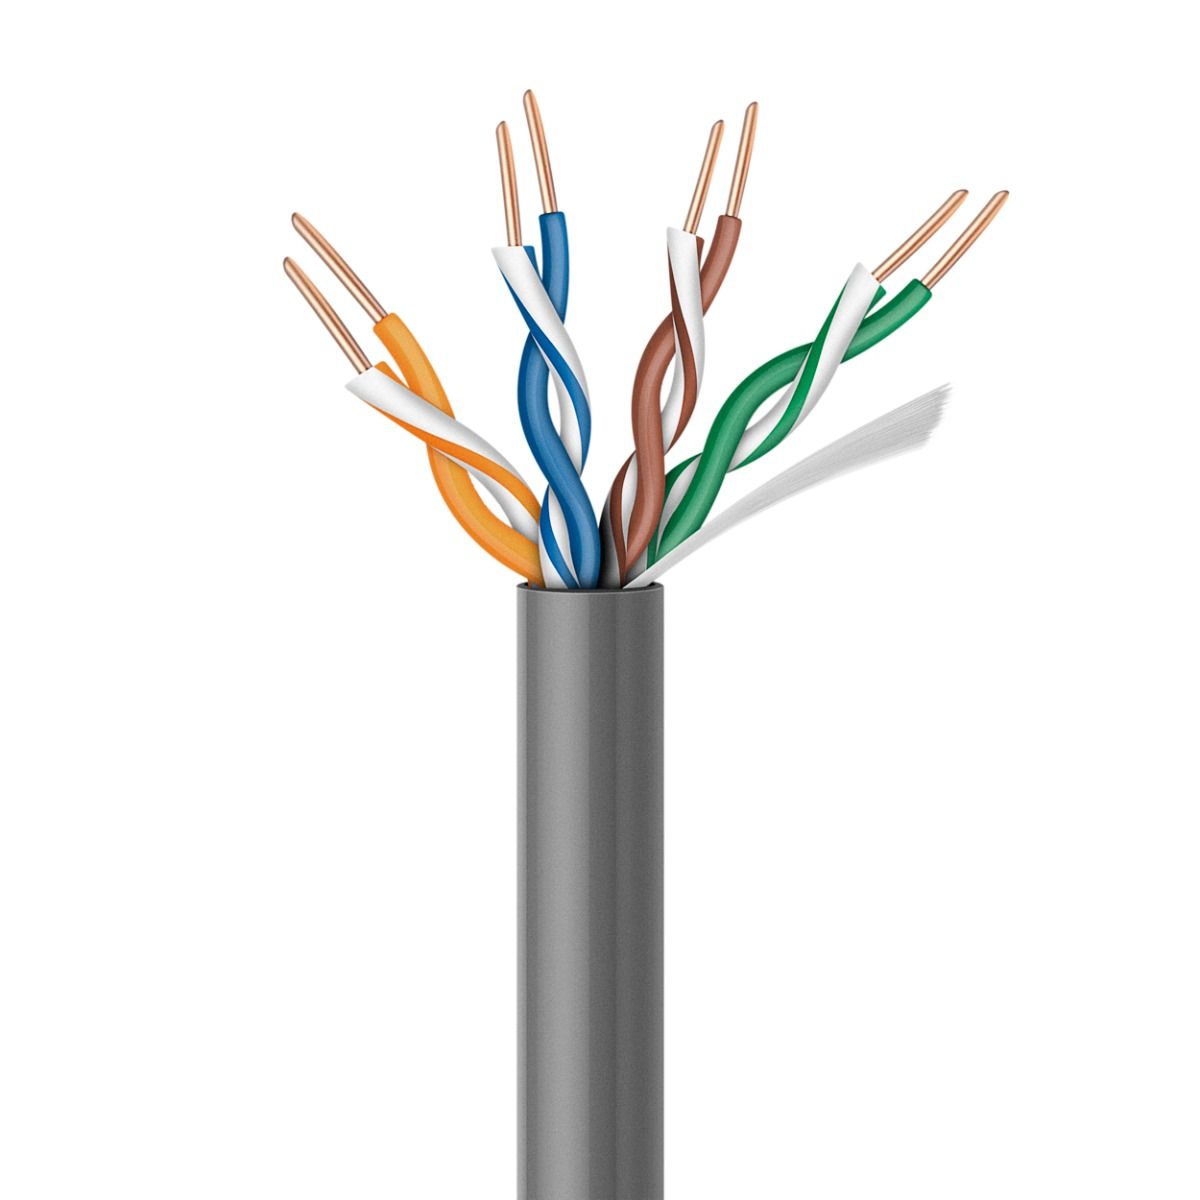 Cables UTP Cat.6 Exterior marca Condumex - Distribuidor Cables y Redes